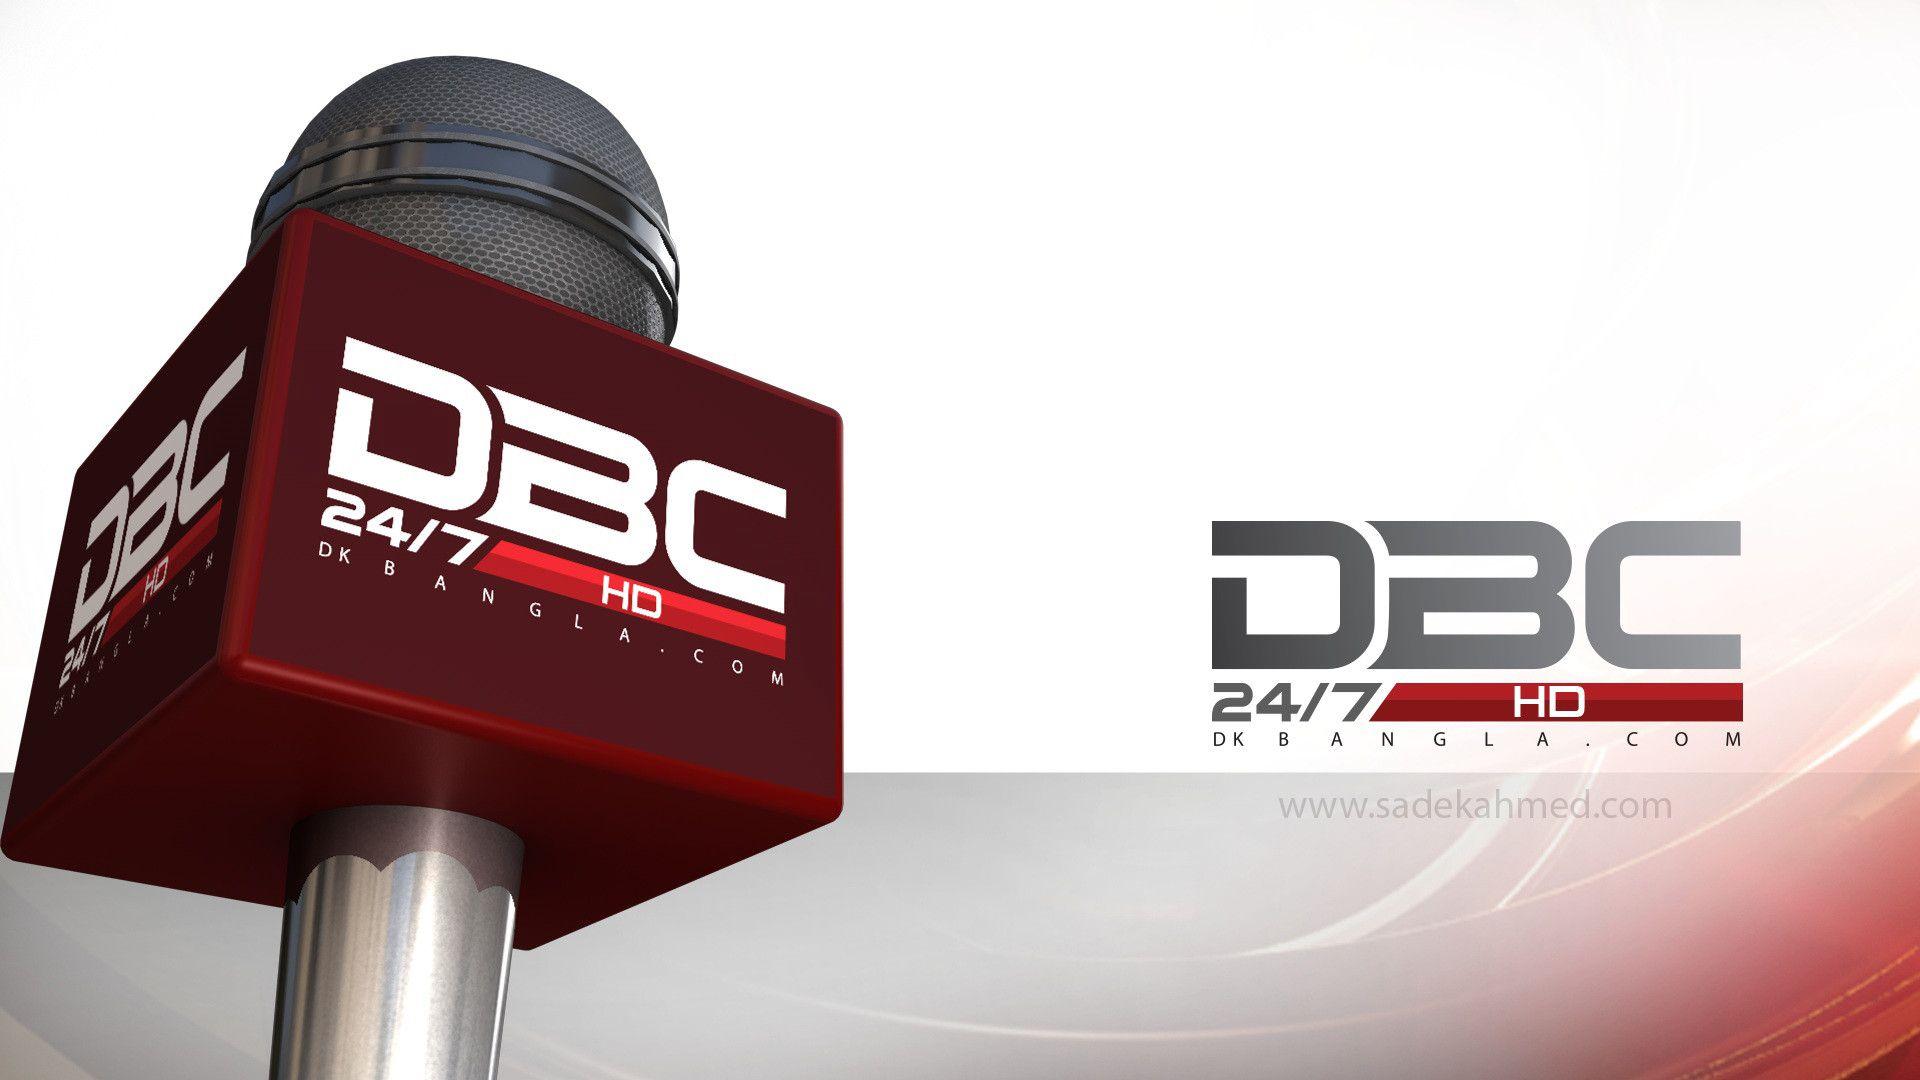 News Channel Logo - DBC NEWS x 7. LIVE. SATELLITE NEWS CHANNEL